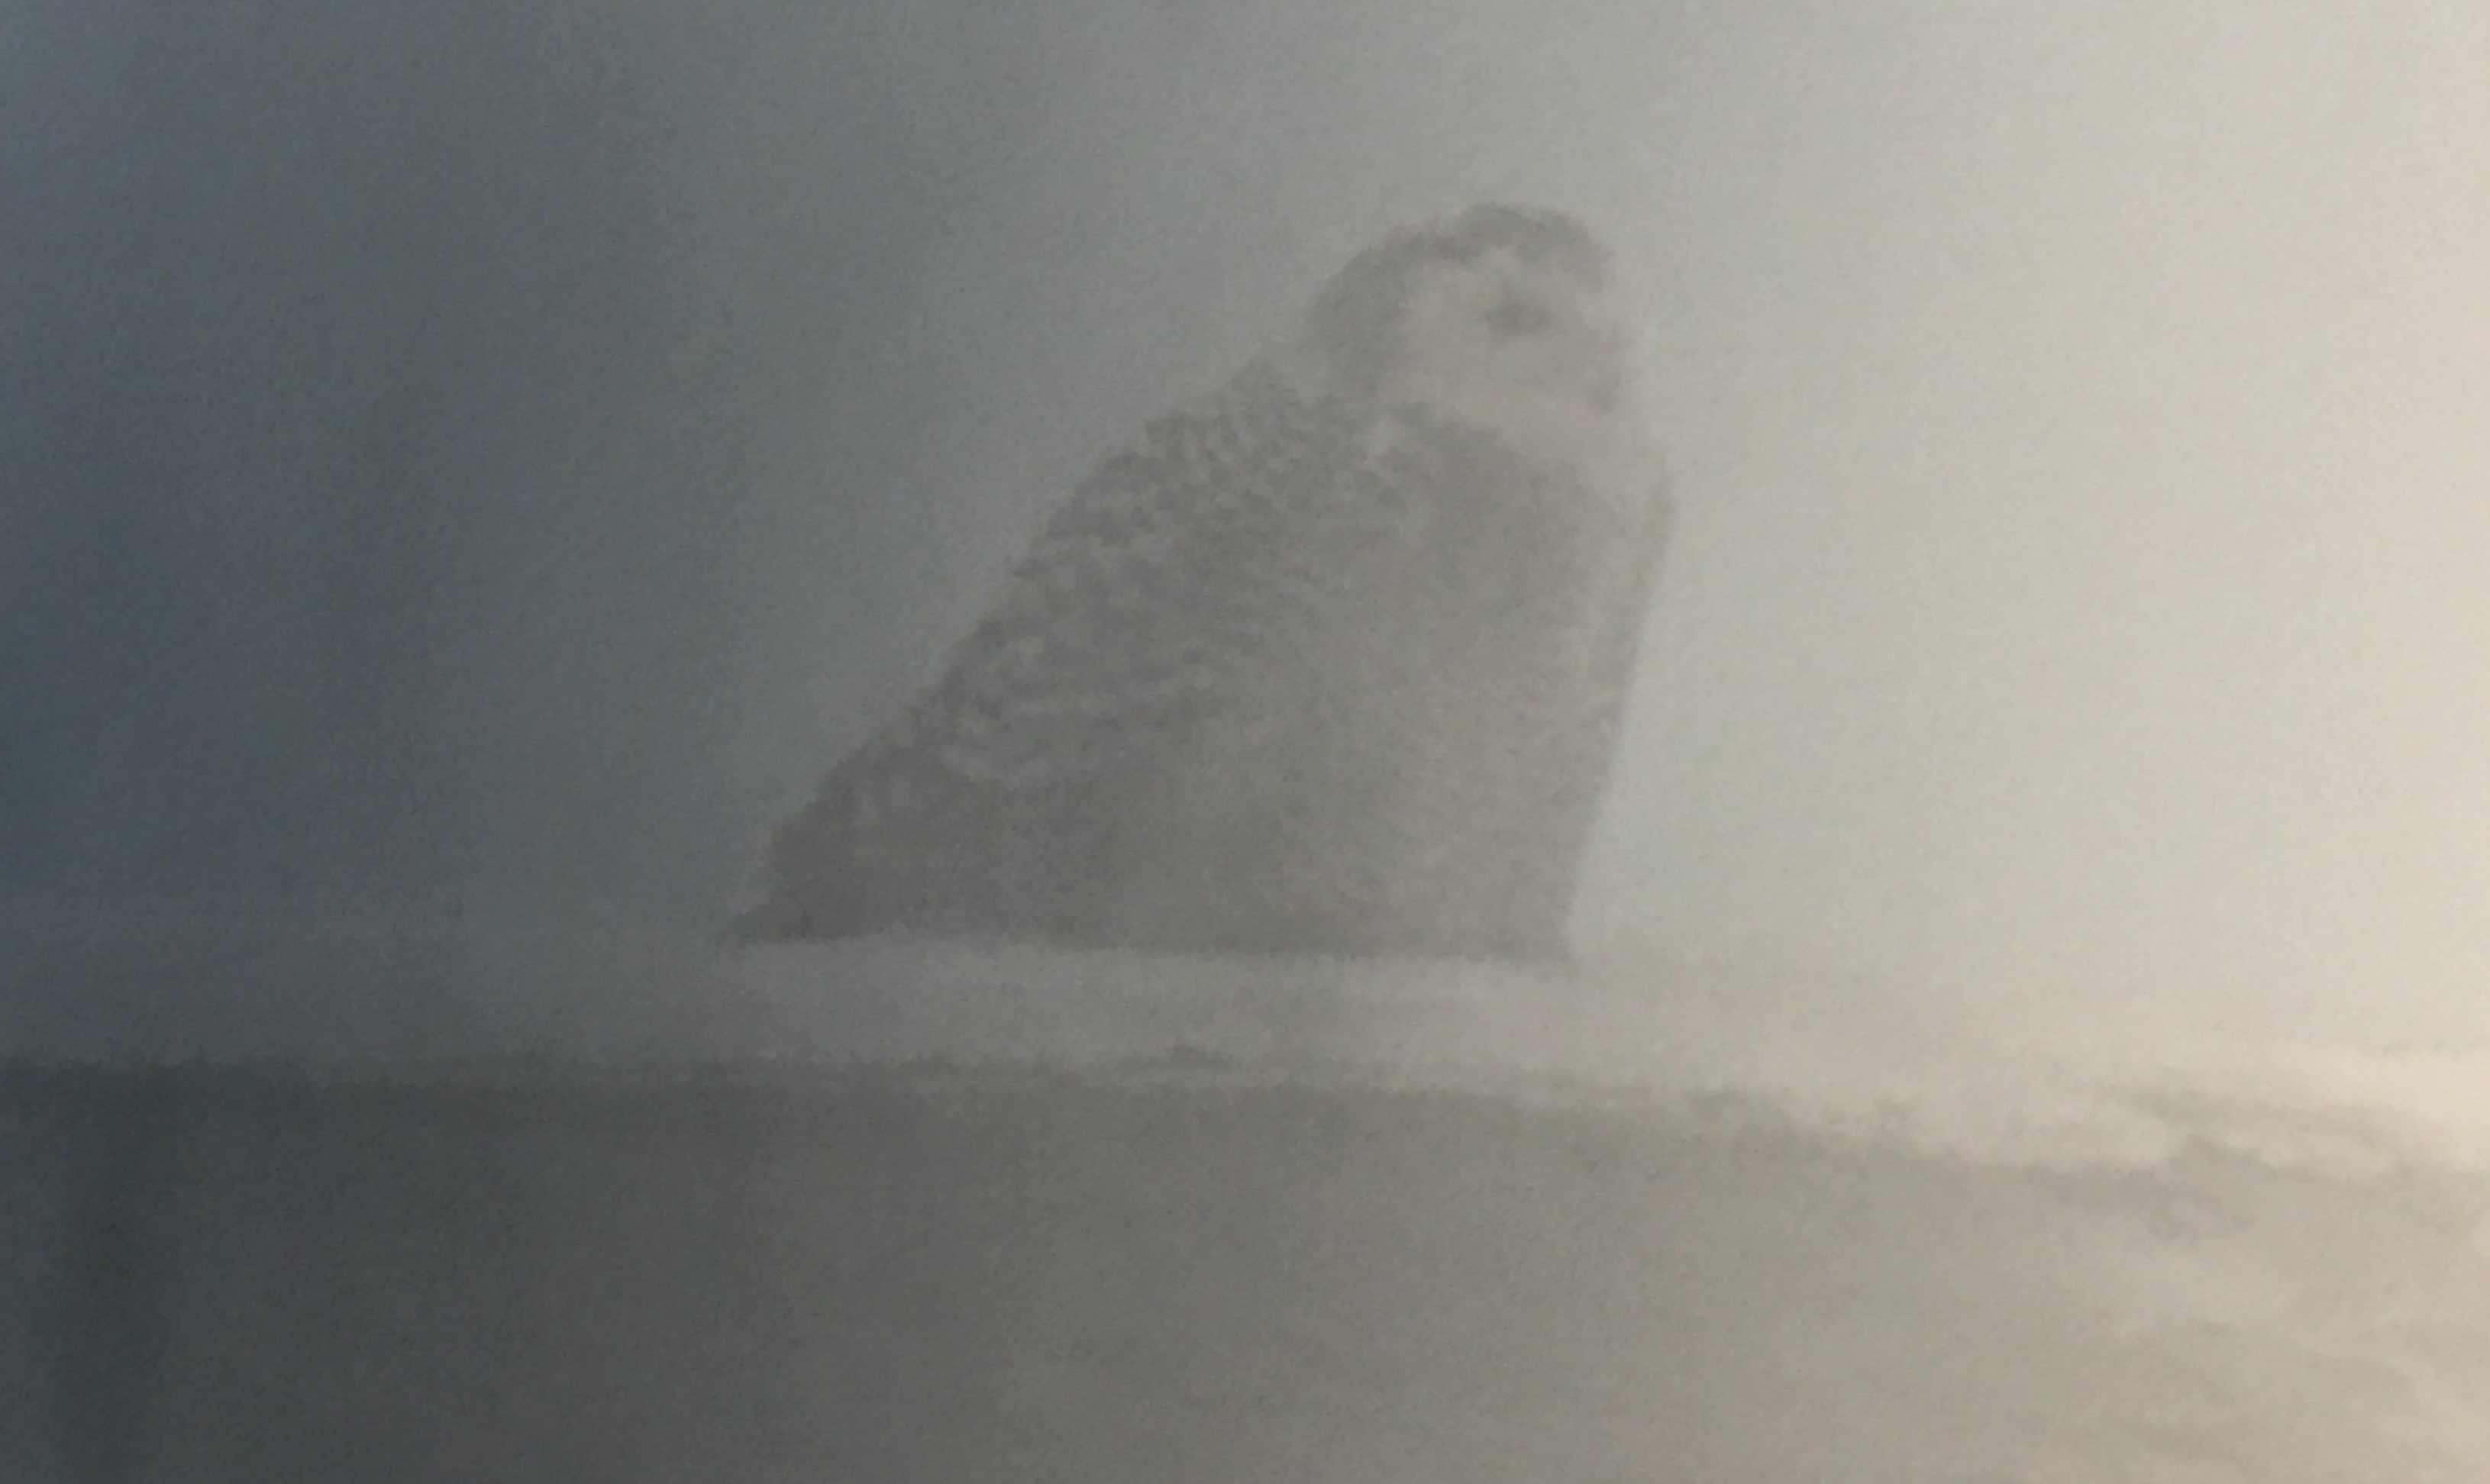 Snowy Owl in the Mist by Matthew Cvetas